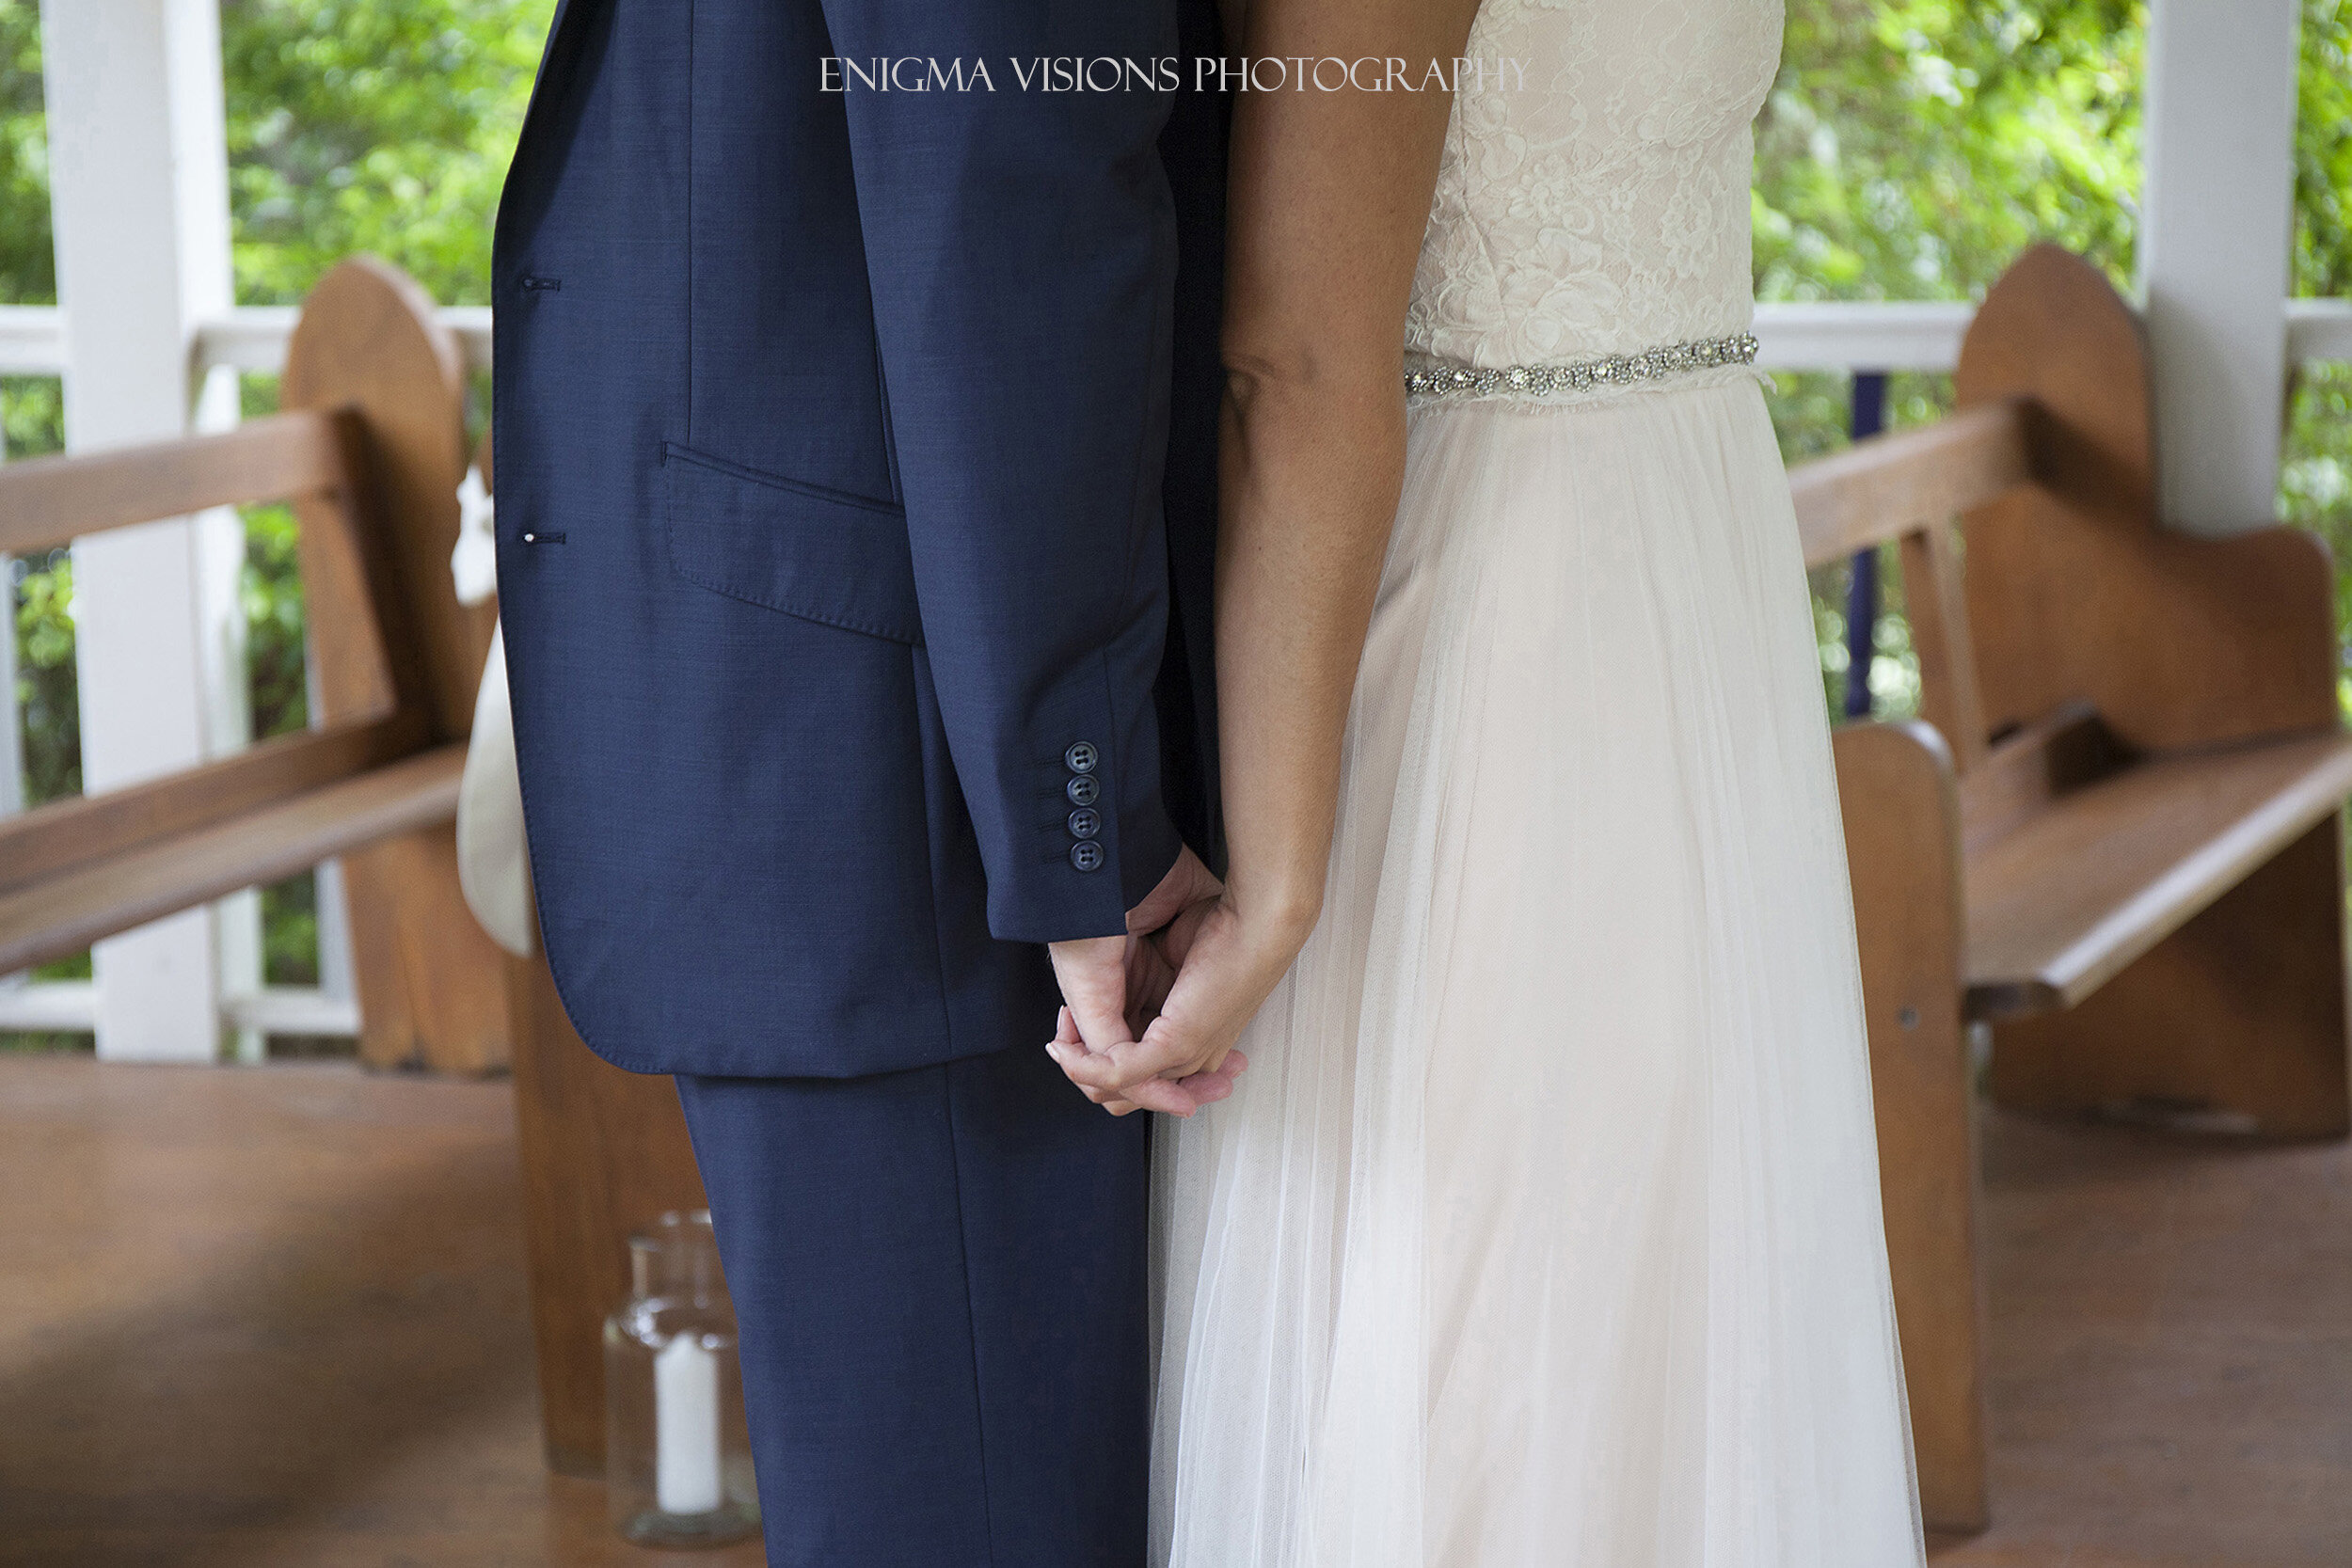 enigma_visions_photography_wedding-Belinda+Howard (14).jpg